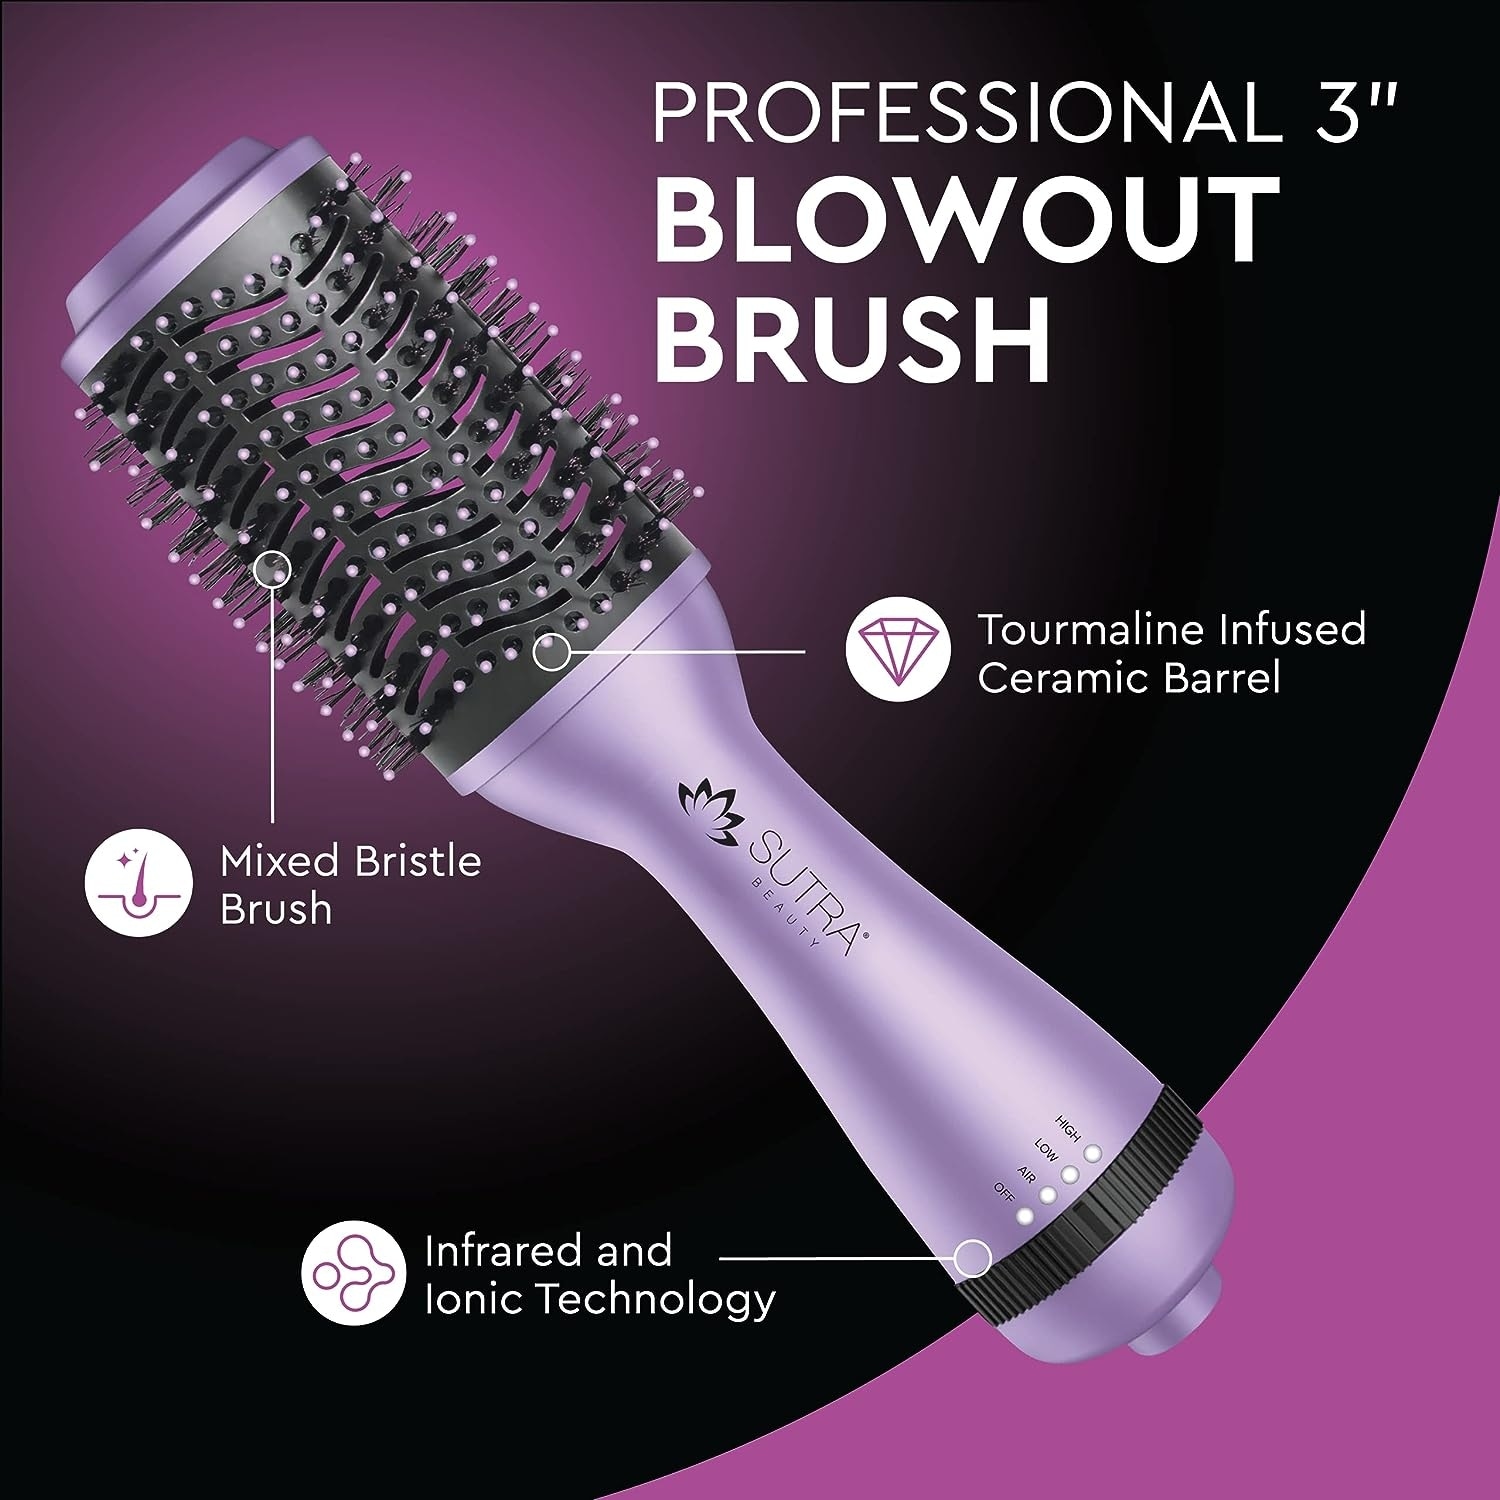 Sutra Beauty Fast Dry Microfiber Hair Towel - Purple